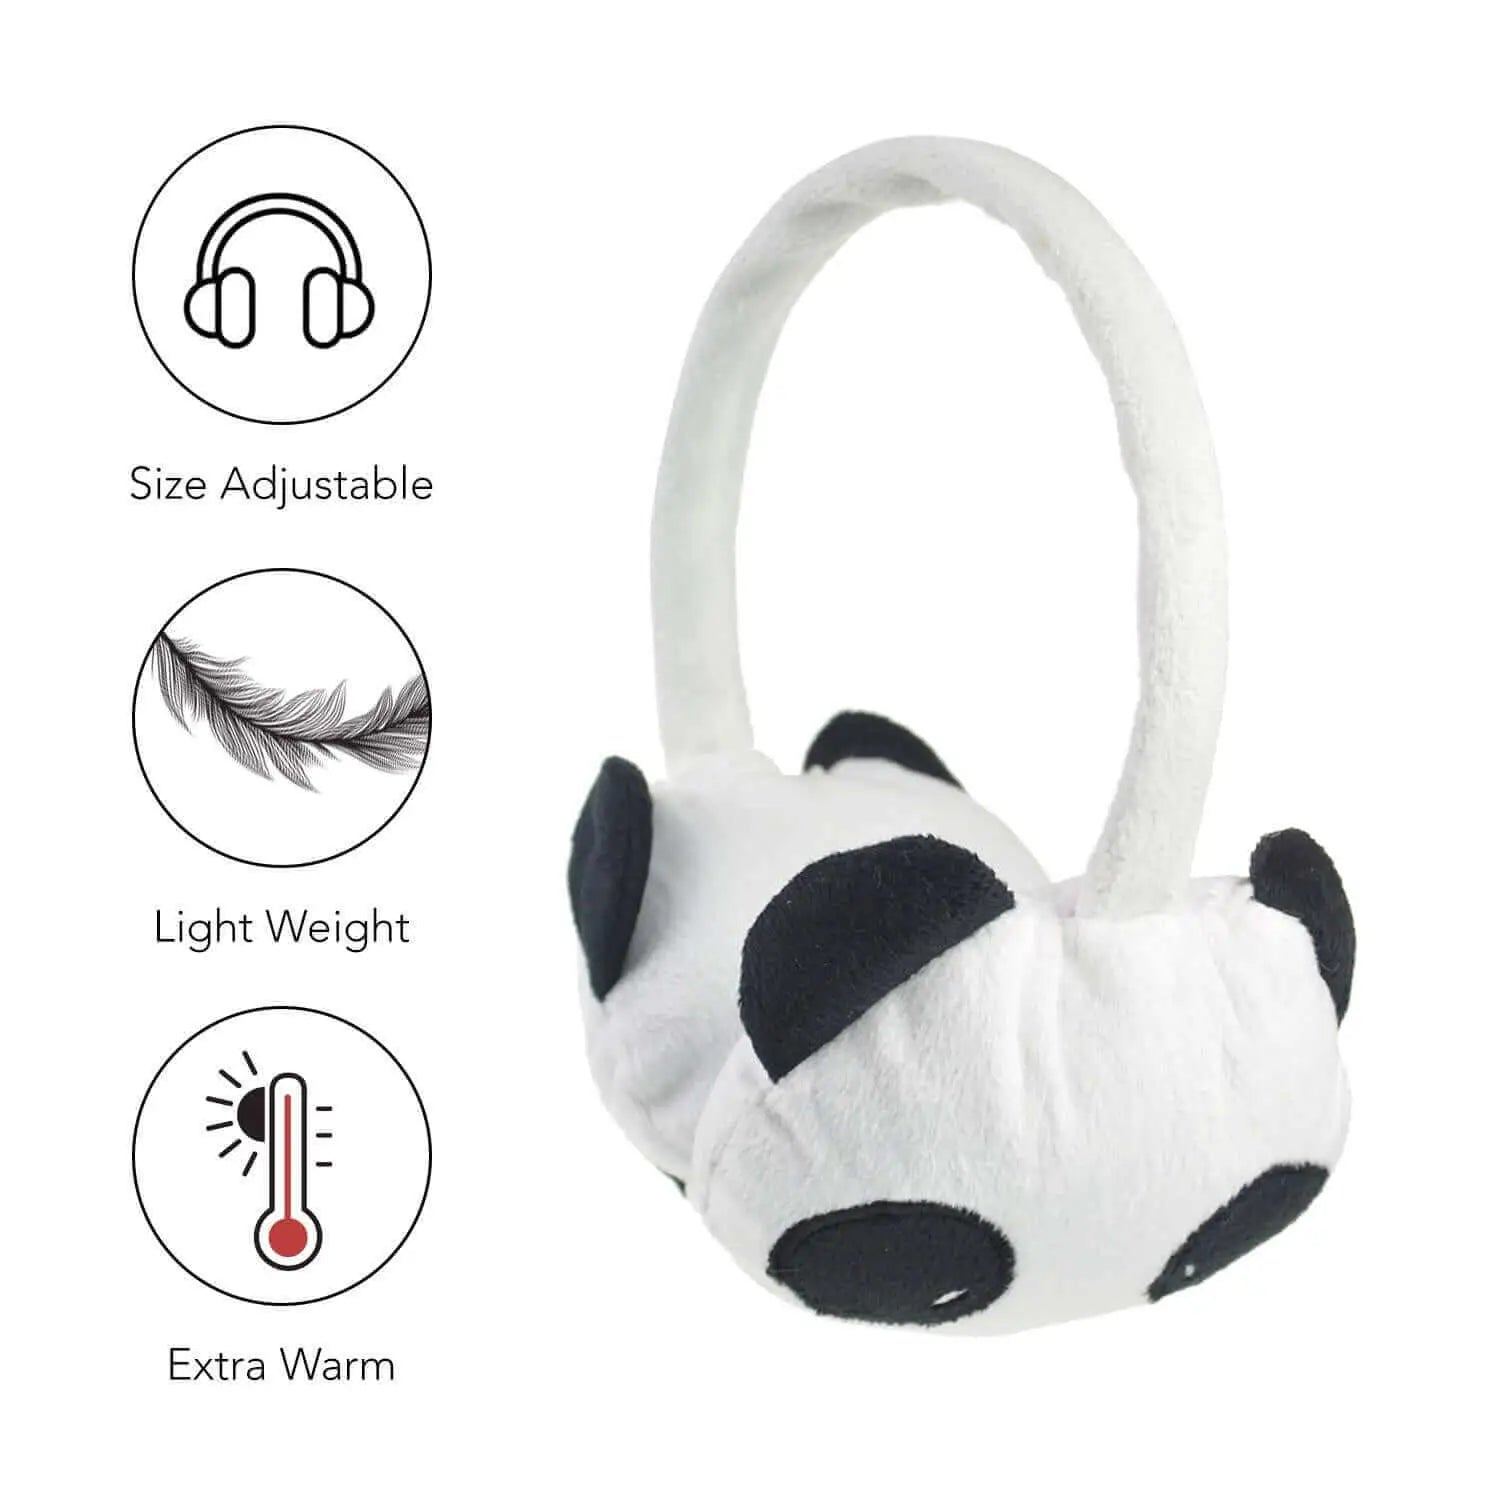 White and black cat animal earmuff, Kids Panda & Cat Animal Earmuff Duo - Adjustable Size, Ear Warmers.